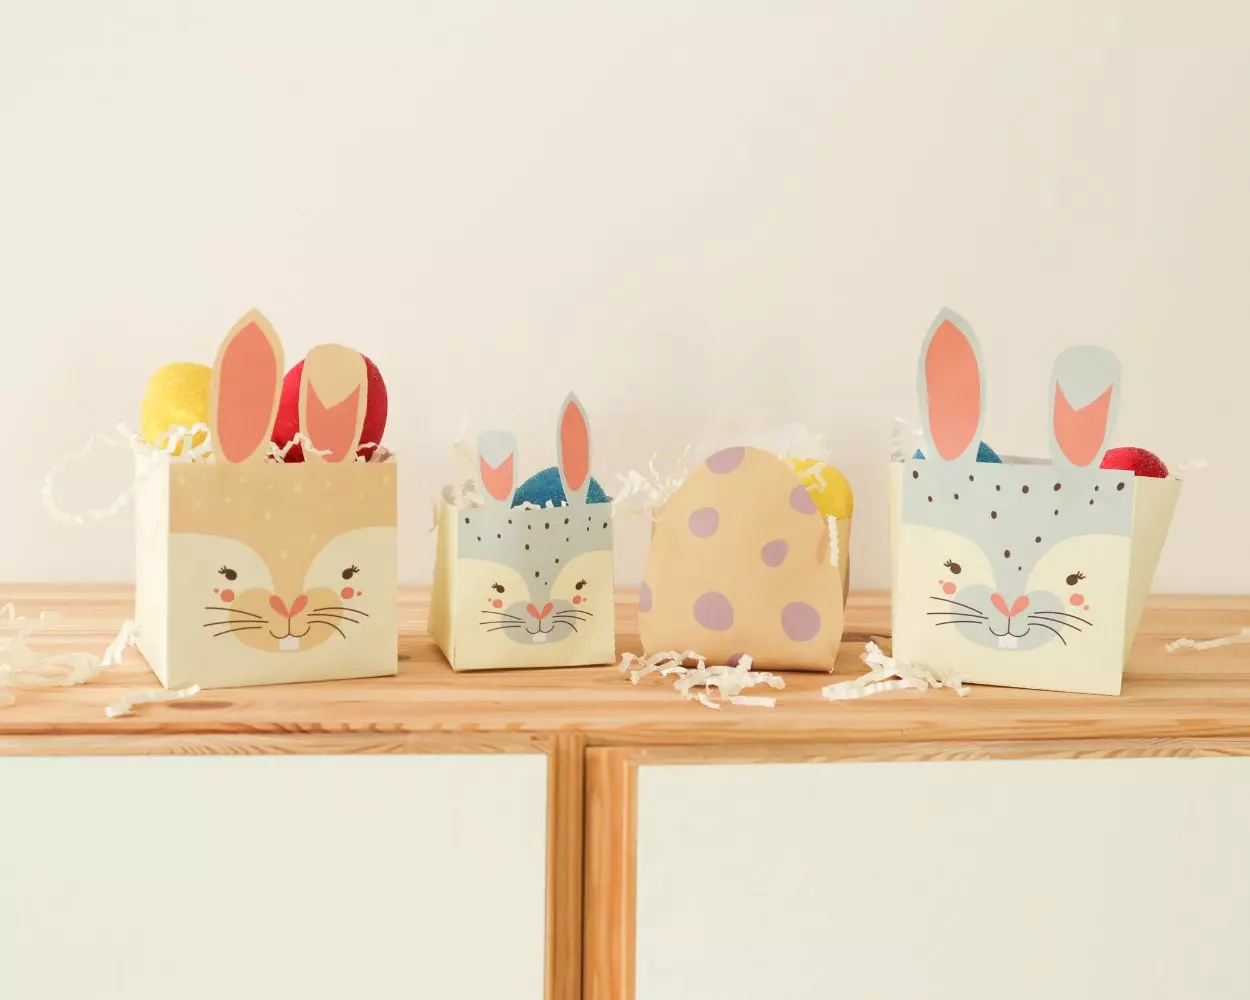 Making Easter baskets for children